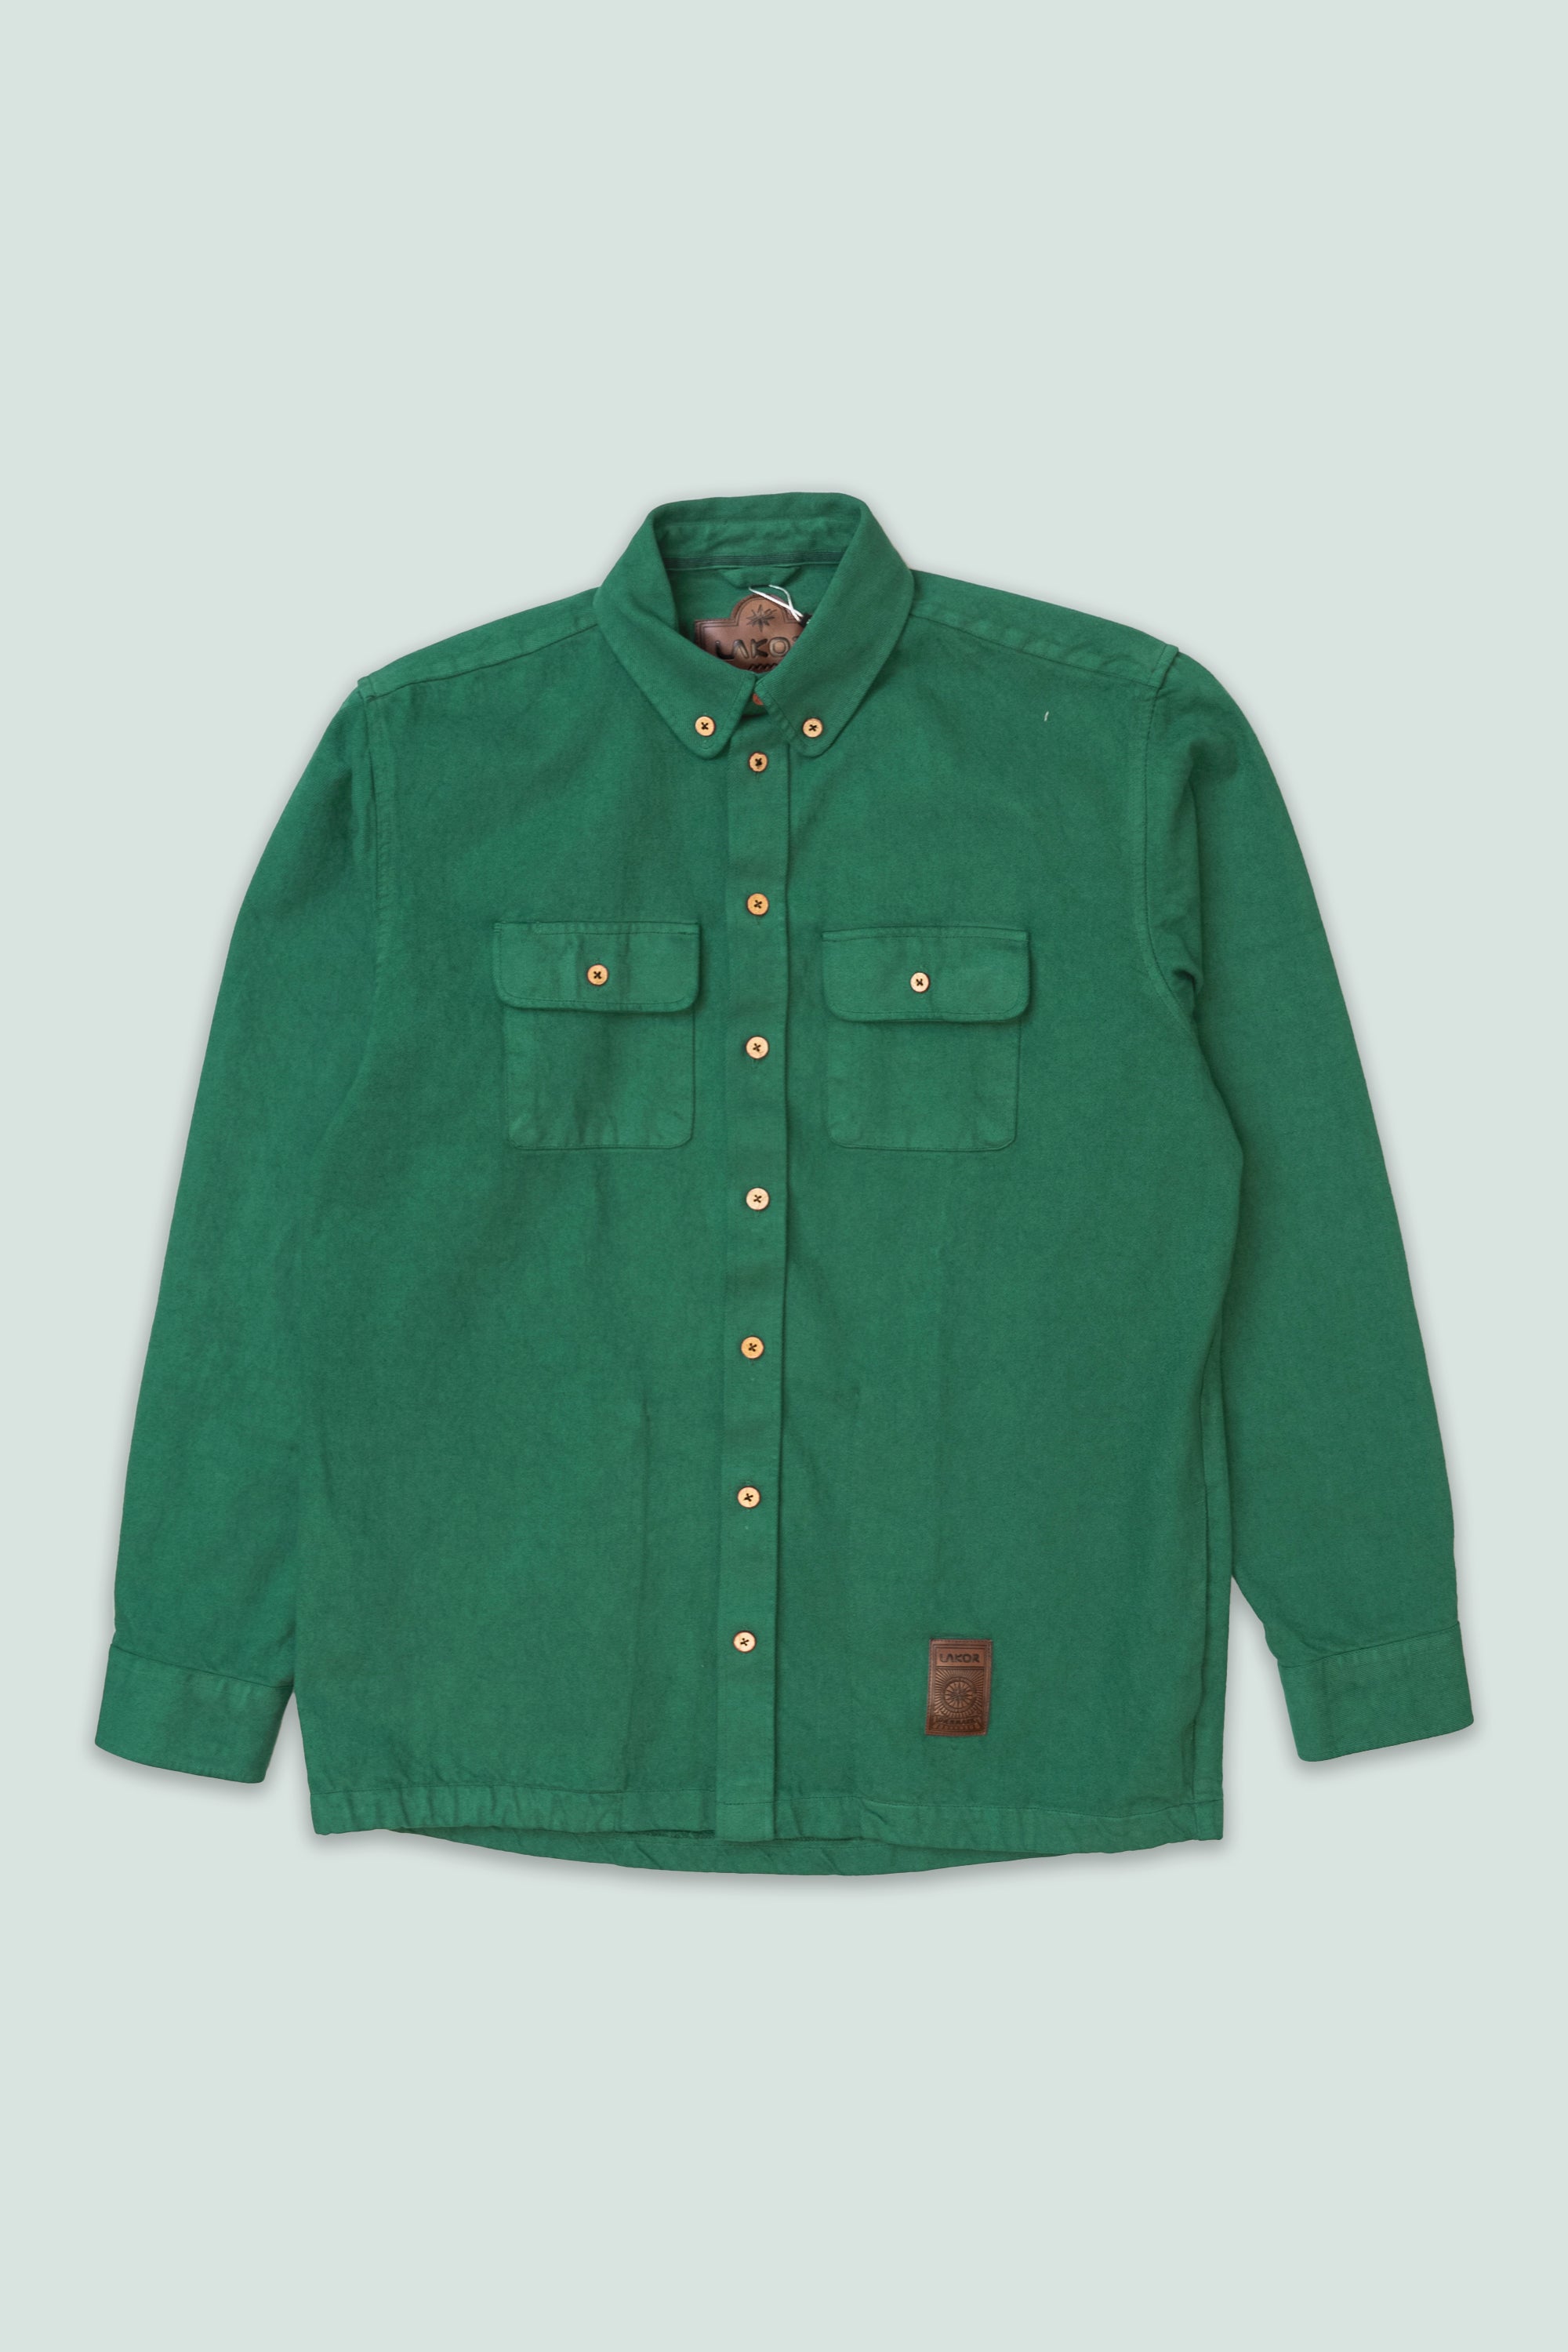 Knokkel Shirt (Green)